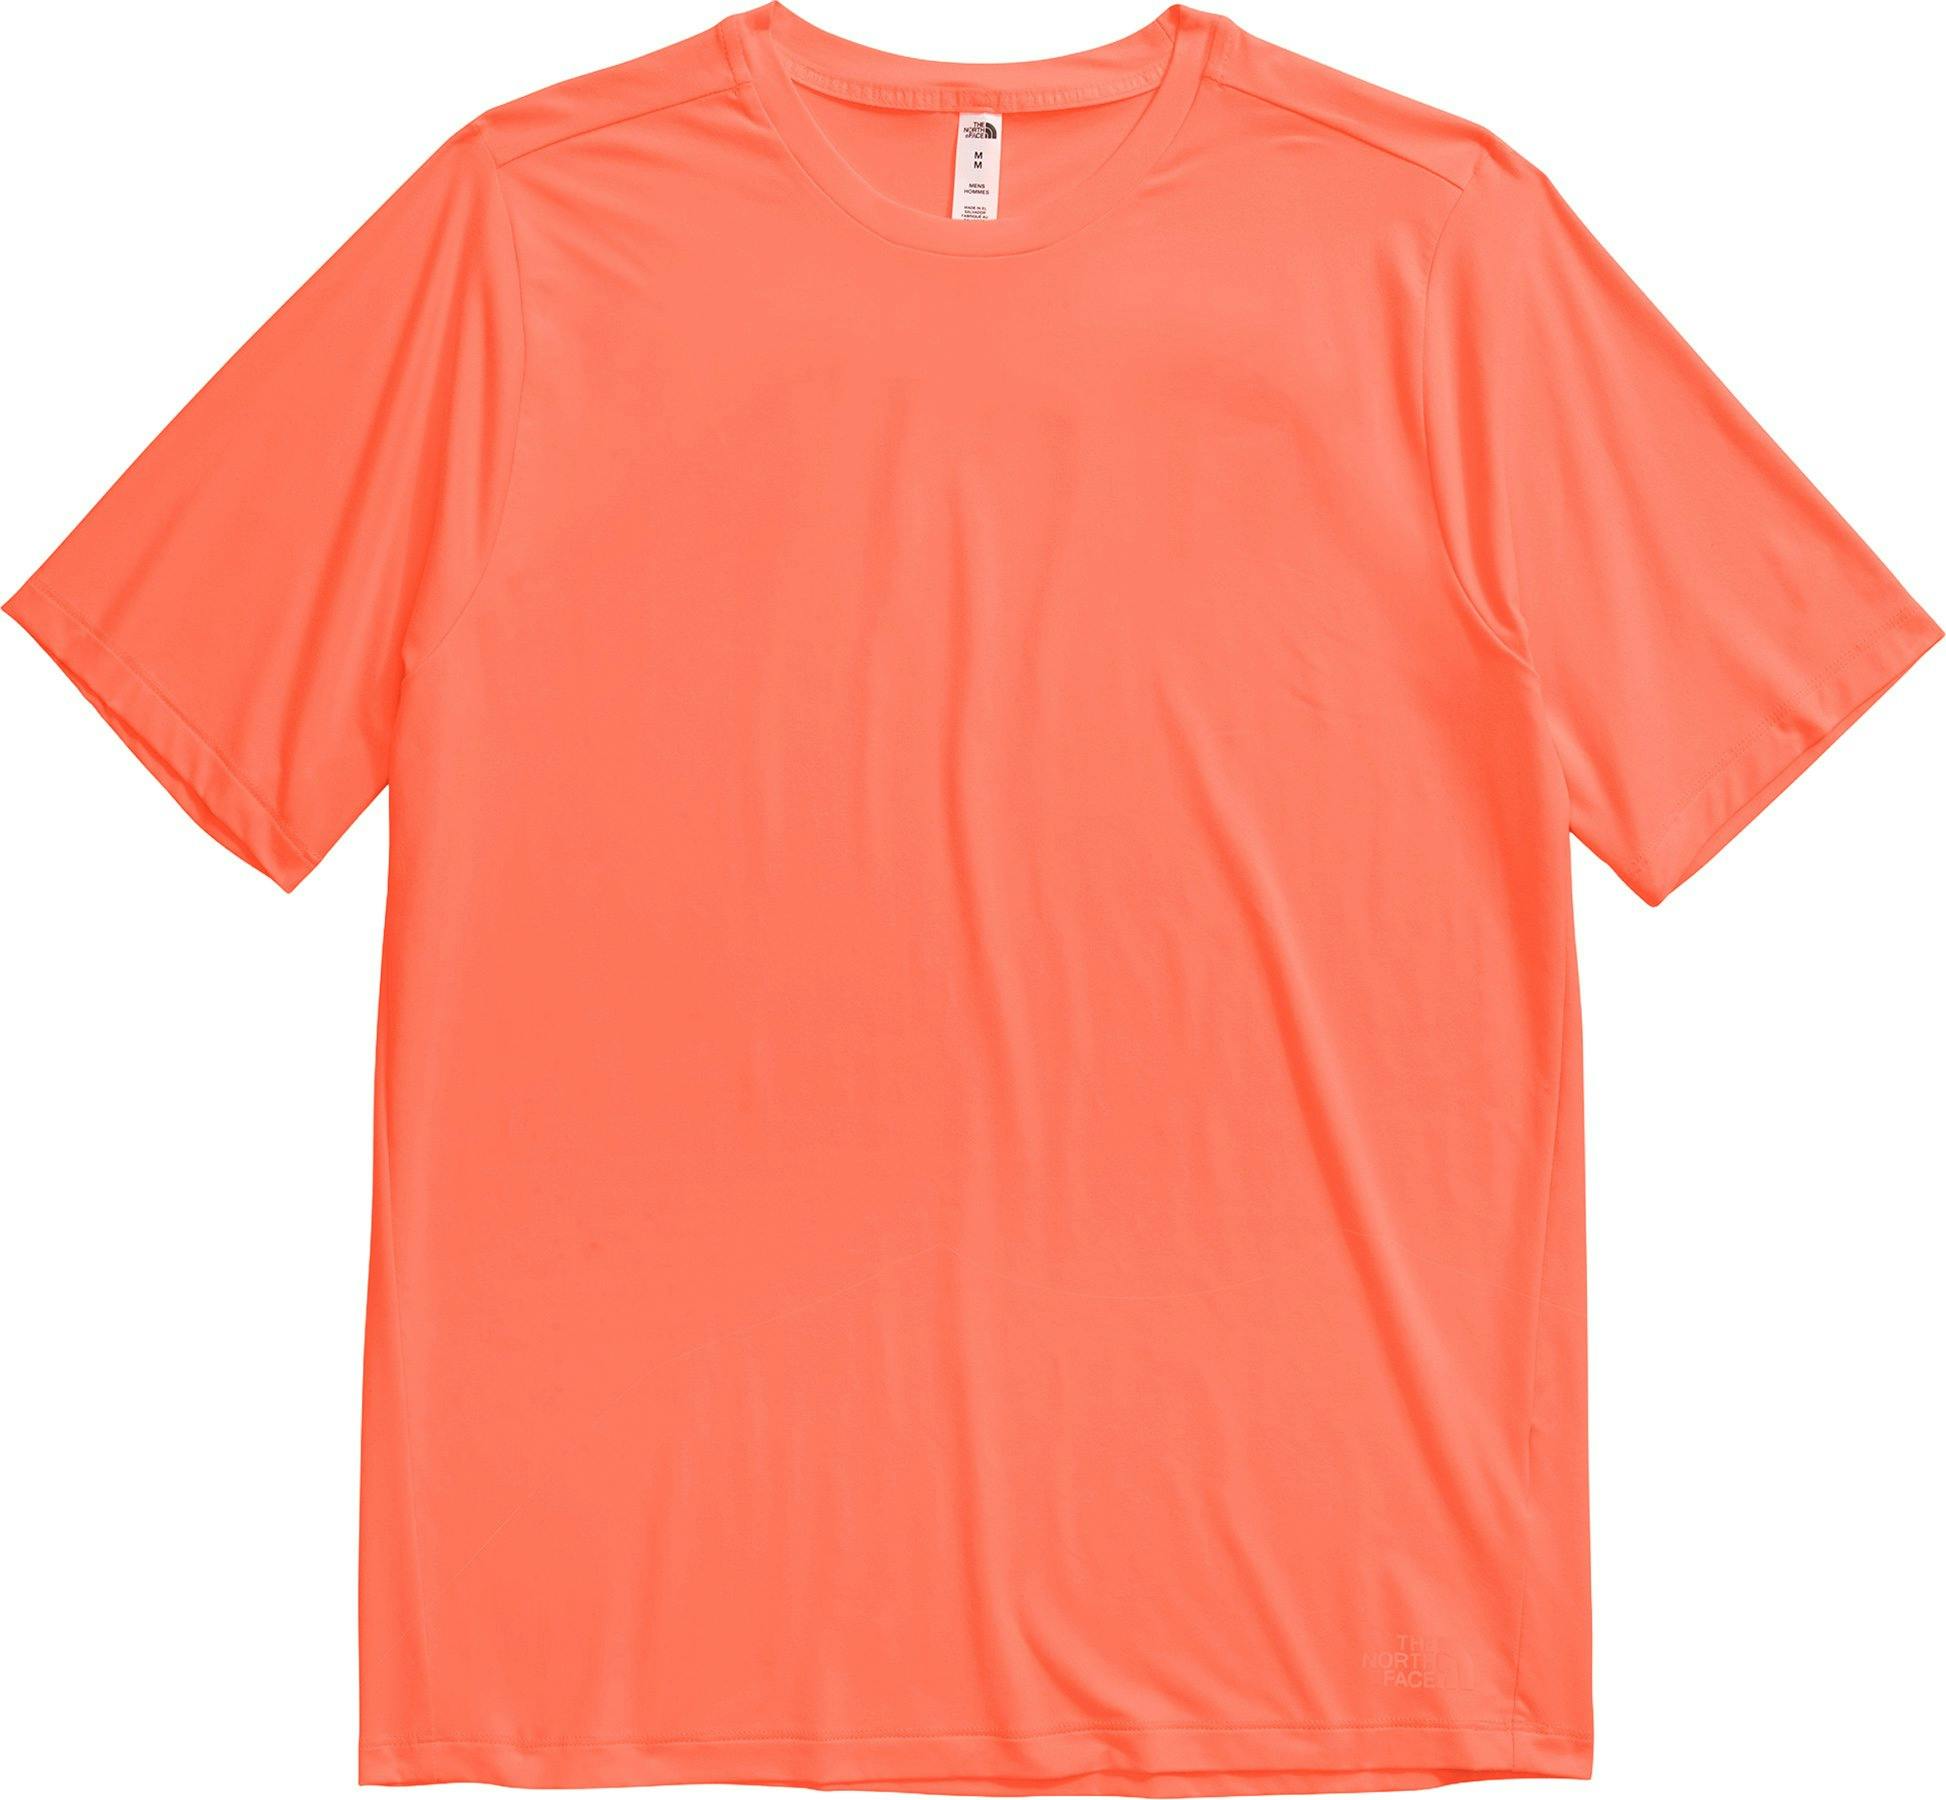 Product image for Dune Sky Short-Sleeve T-Shirt - Men’s